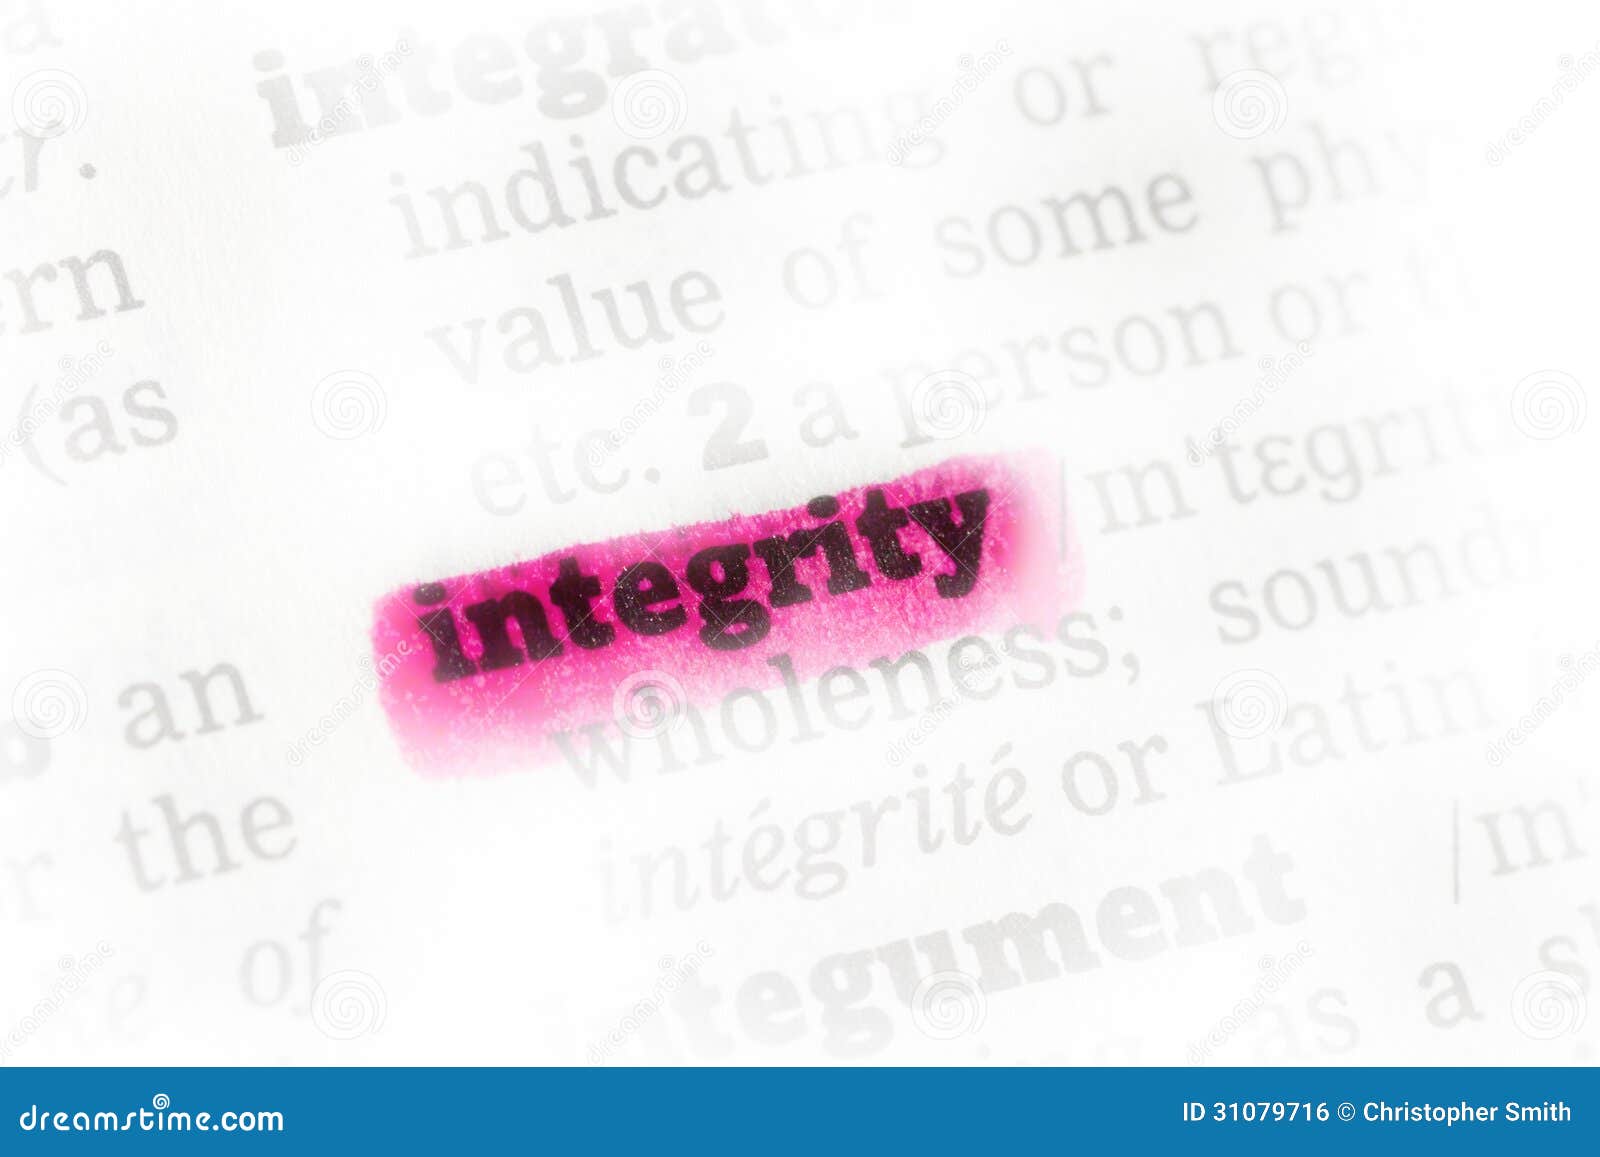 Integrity definition essay